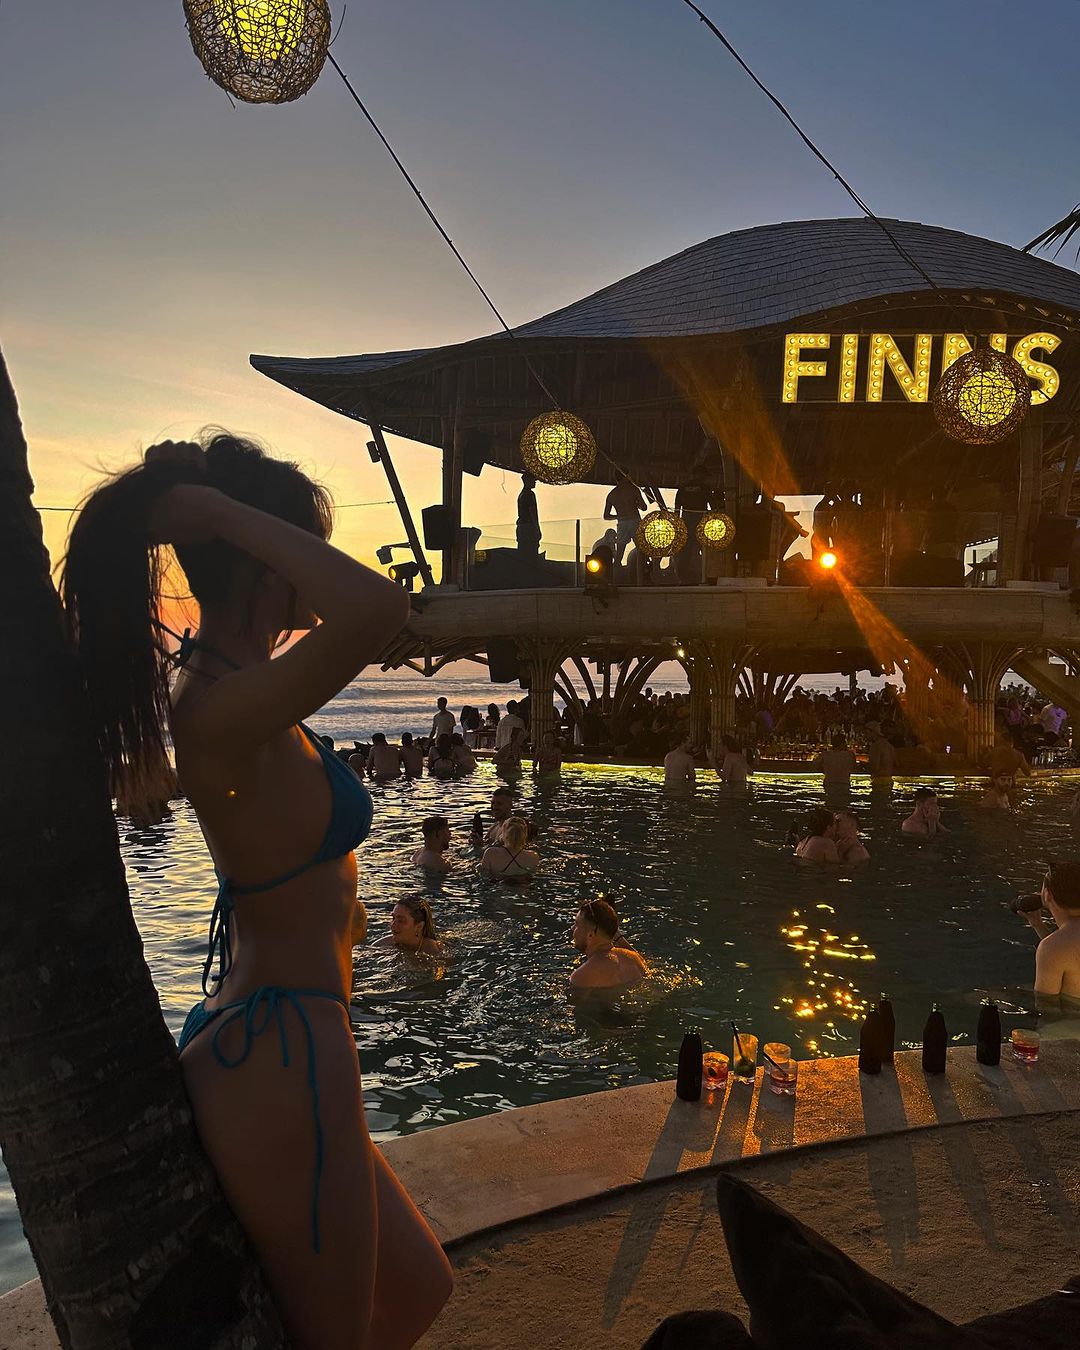 Dal SOOBIN in a bikini on Instagram. What's up in Bali